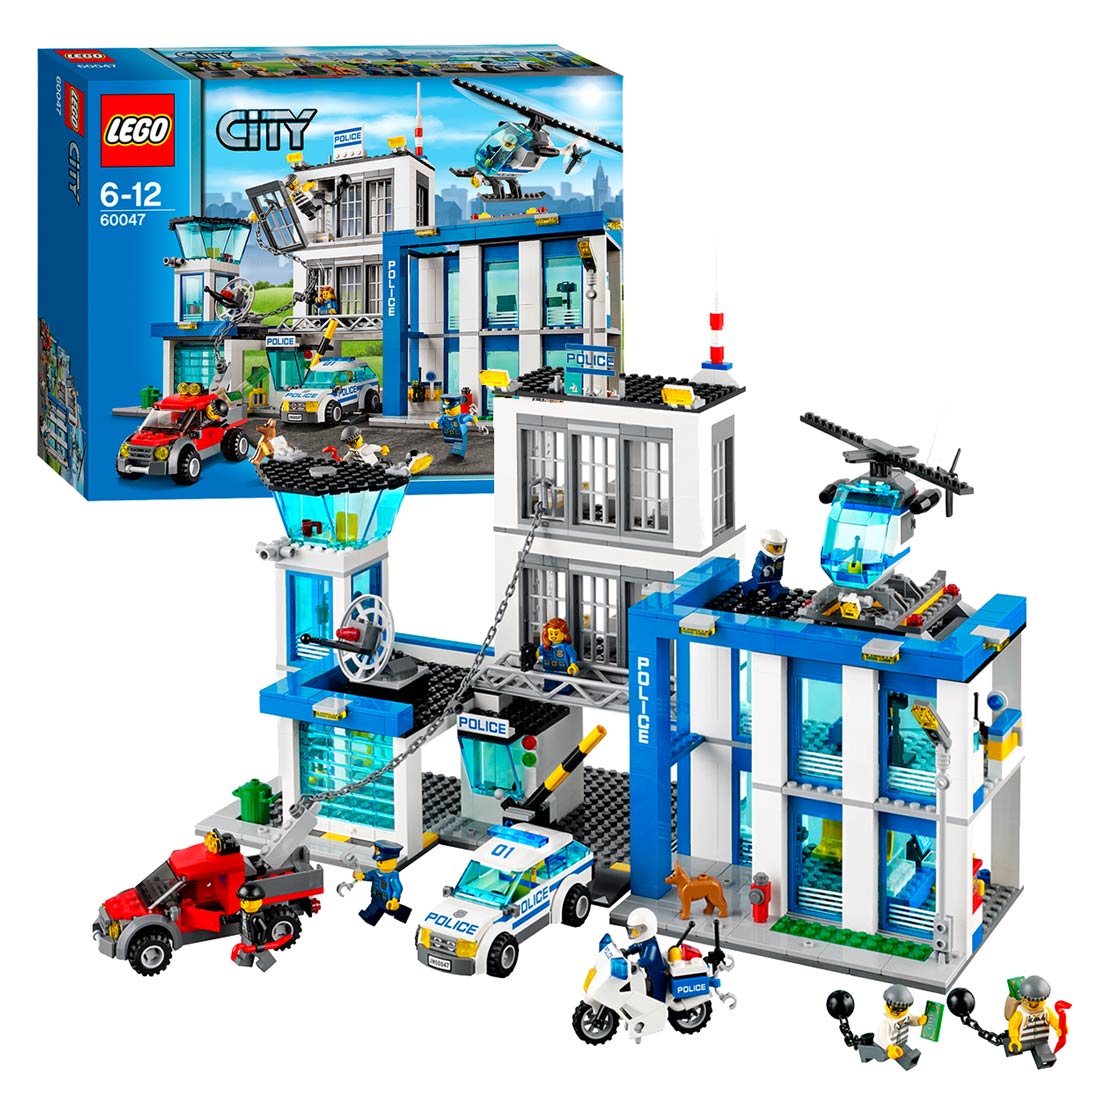 LEGO City 60047 Politiebureau